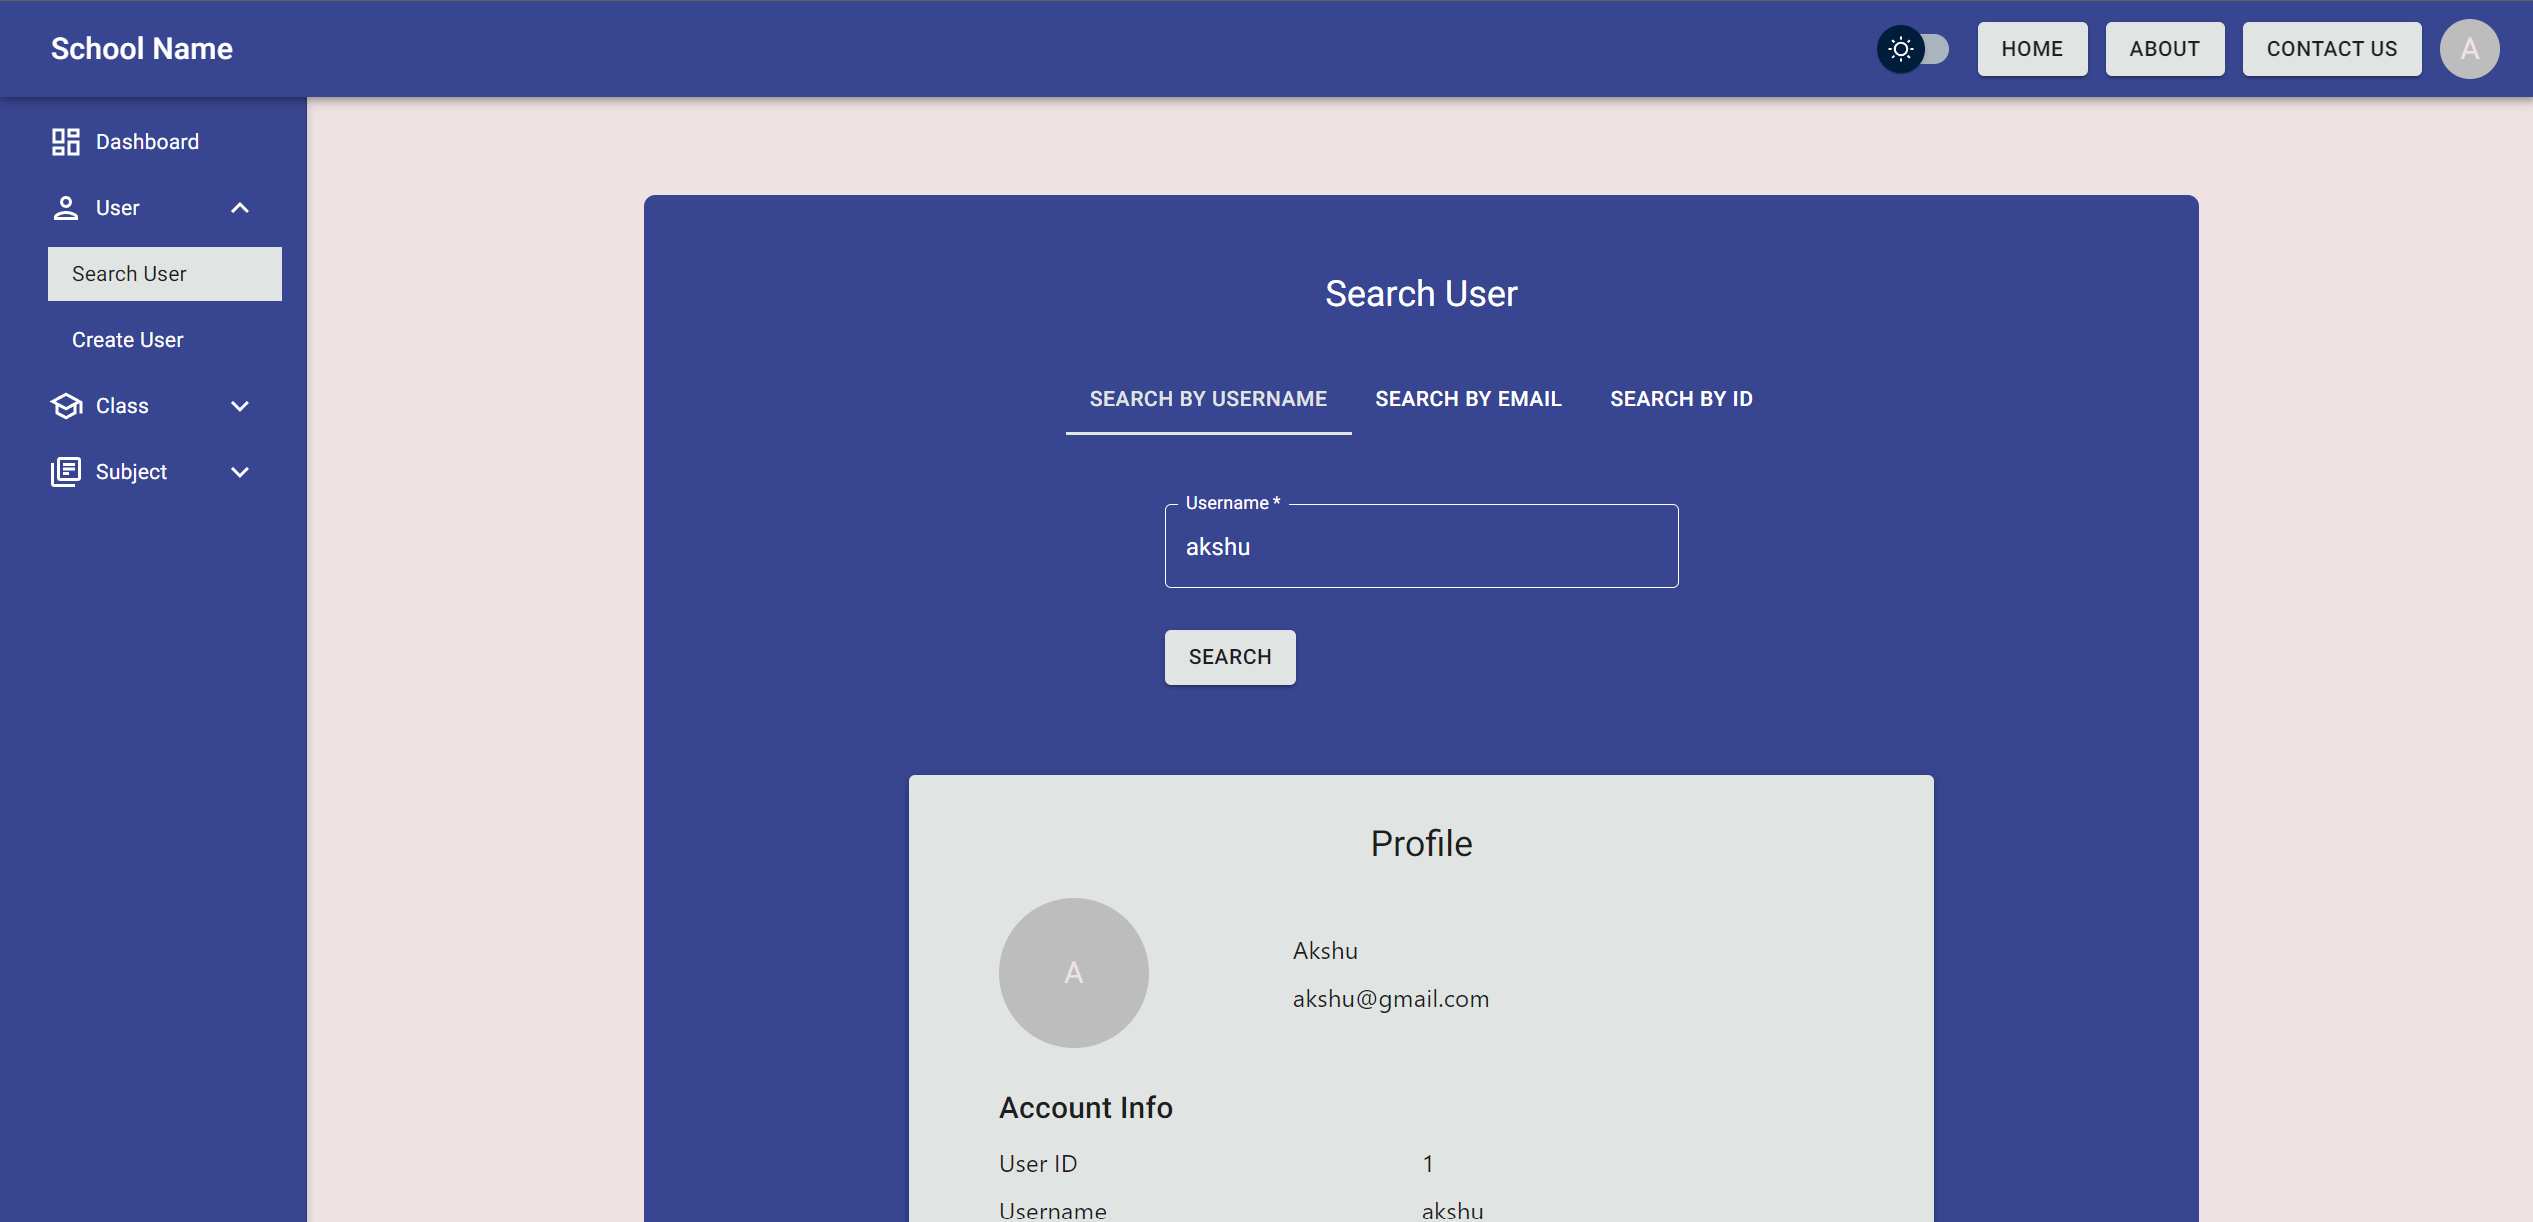 Admin Dashboard - Search User (Light)